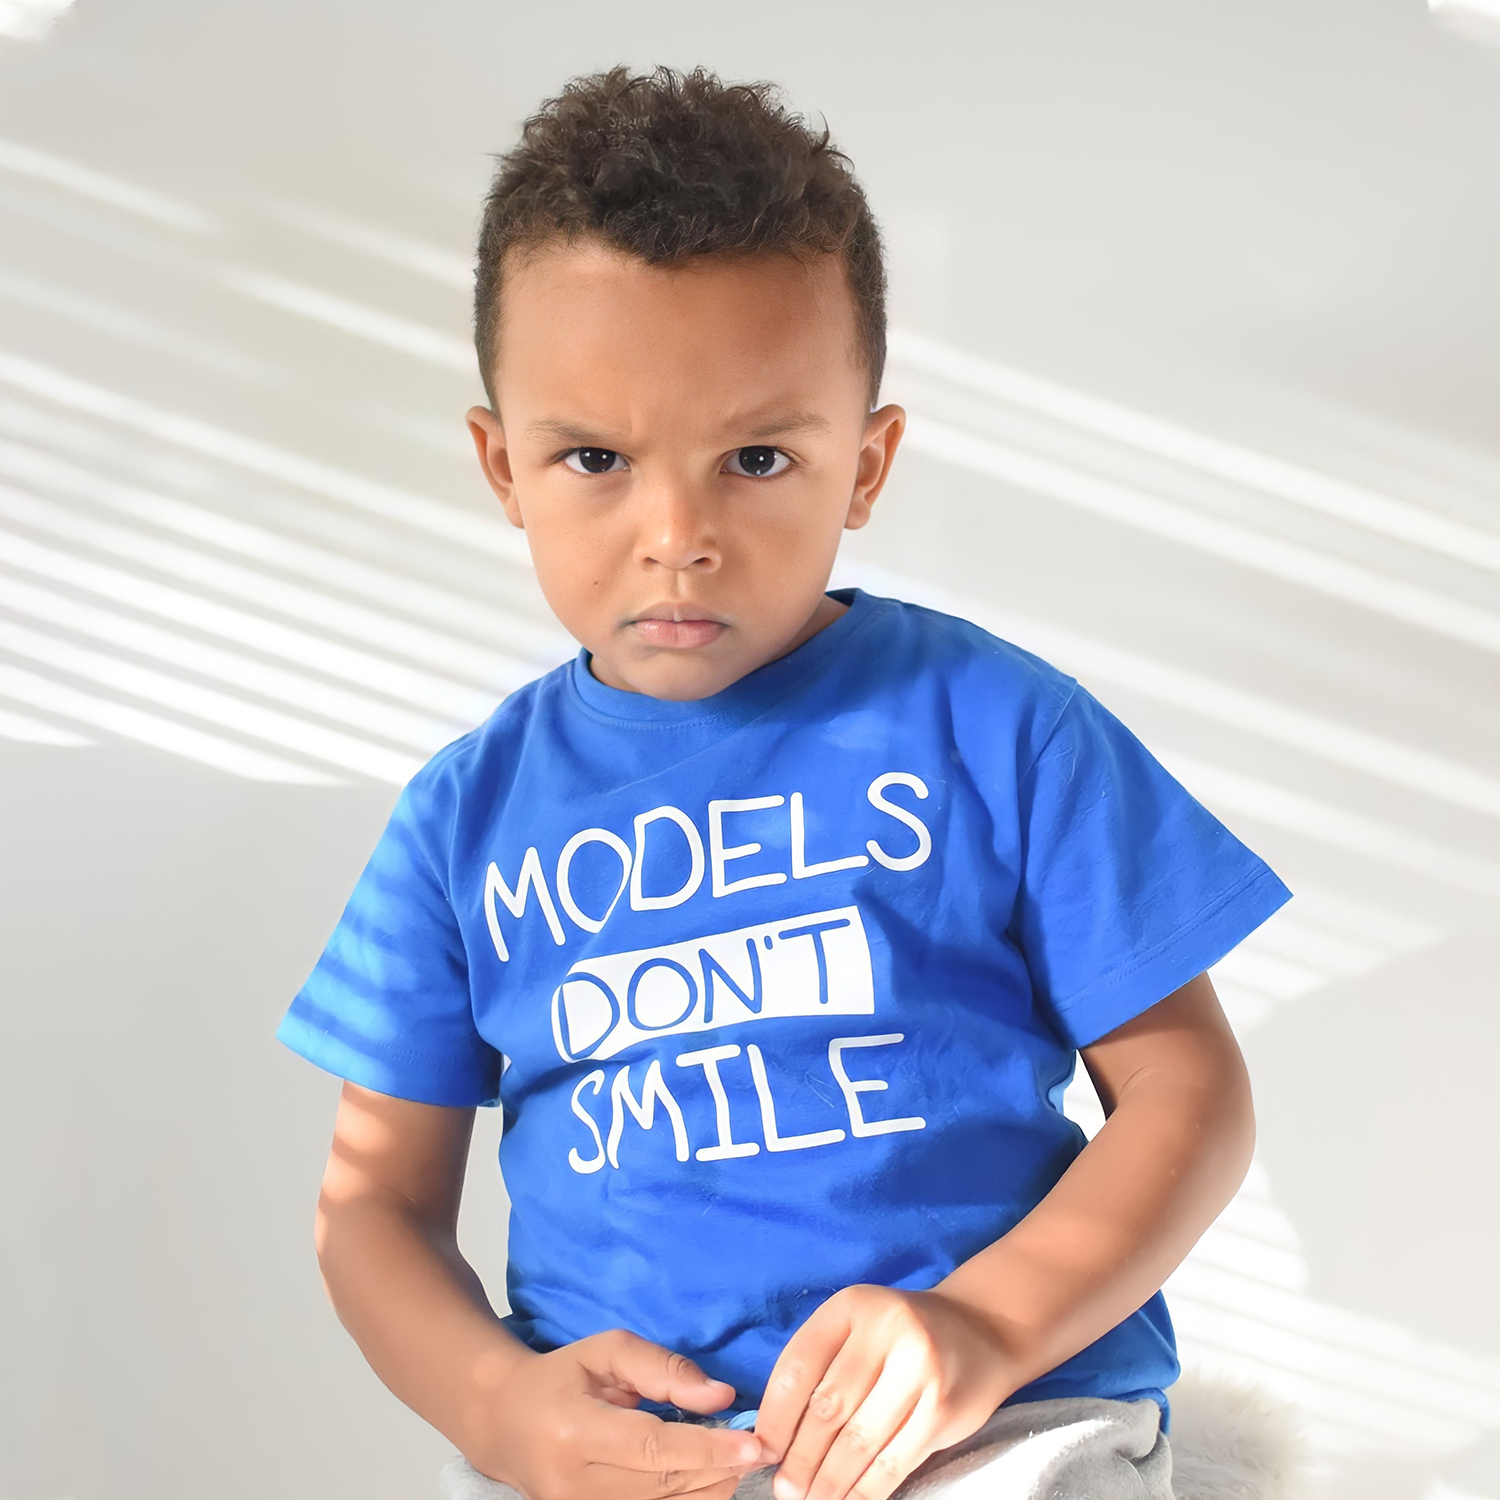 'Models don't smile' kids shortsleeve shirt